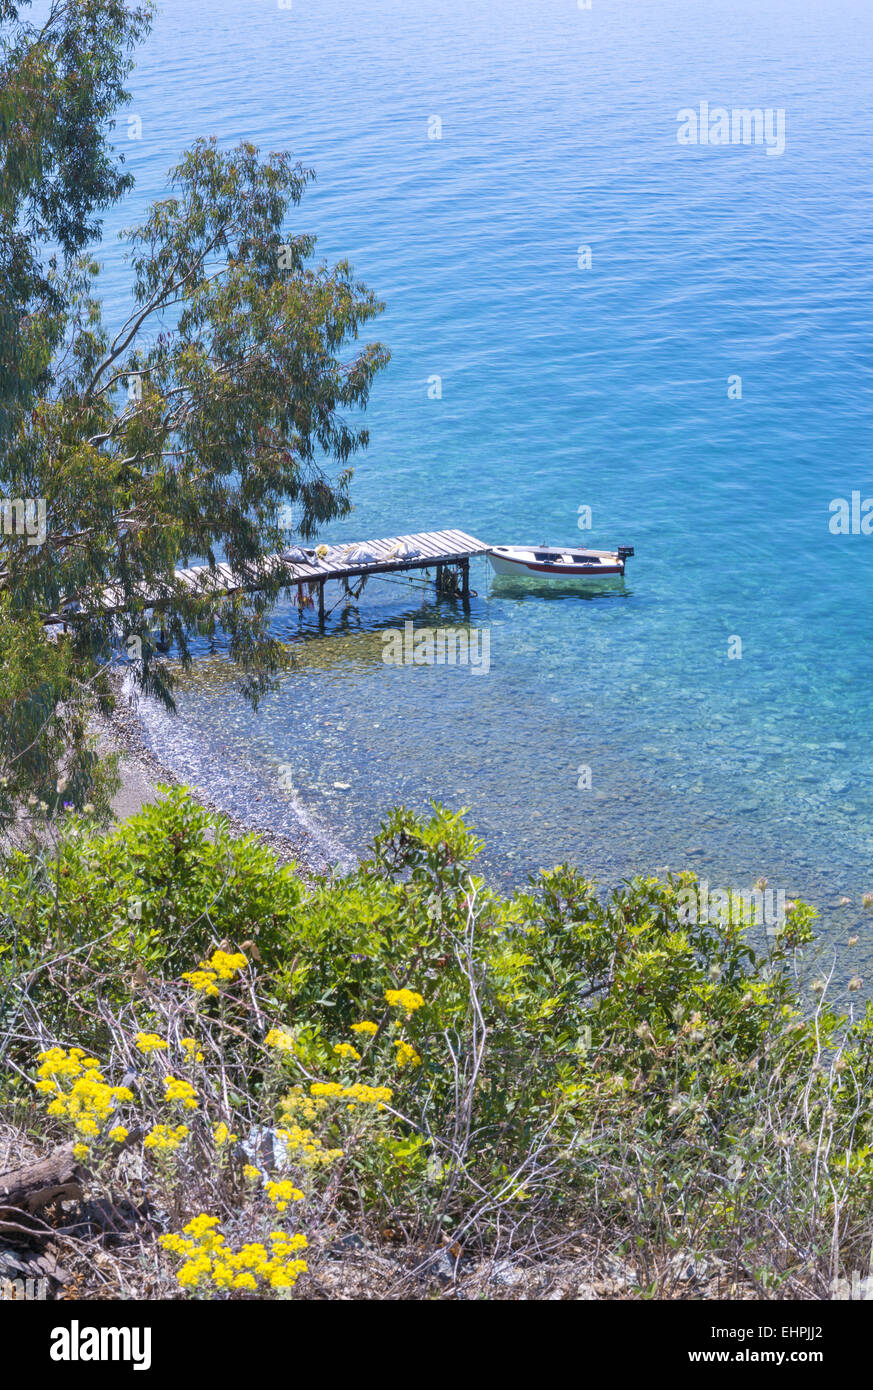 Evia Limni Greek island beach dock boat seascape Stock Photo